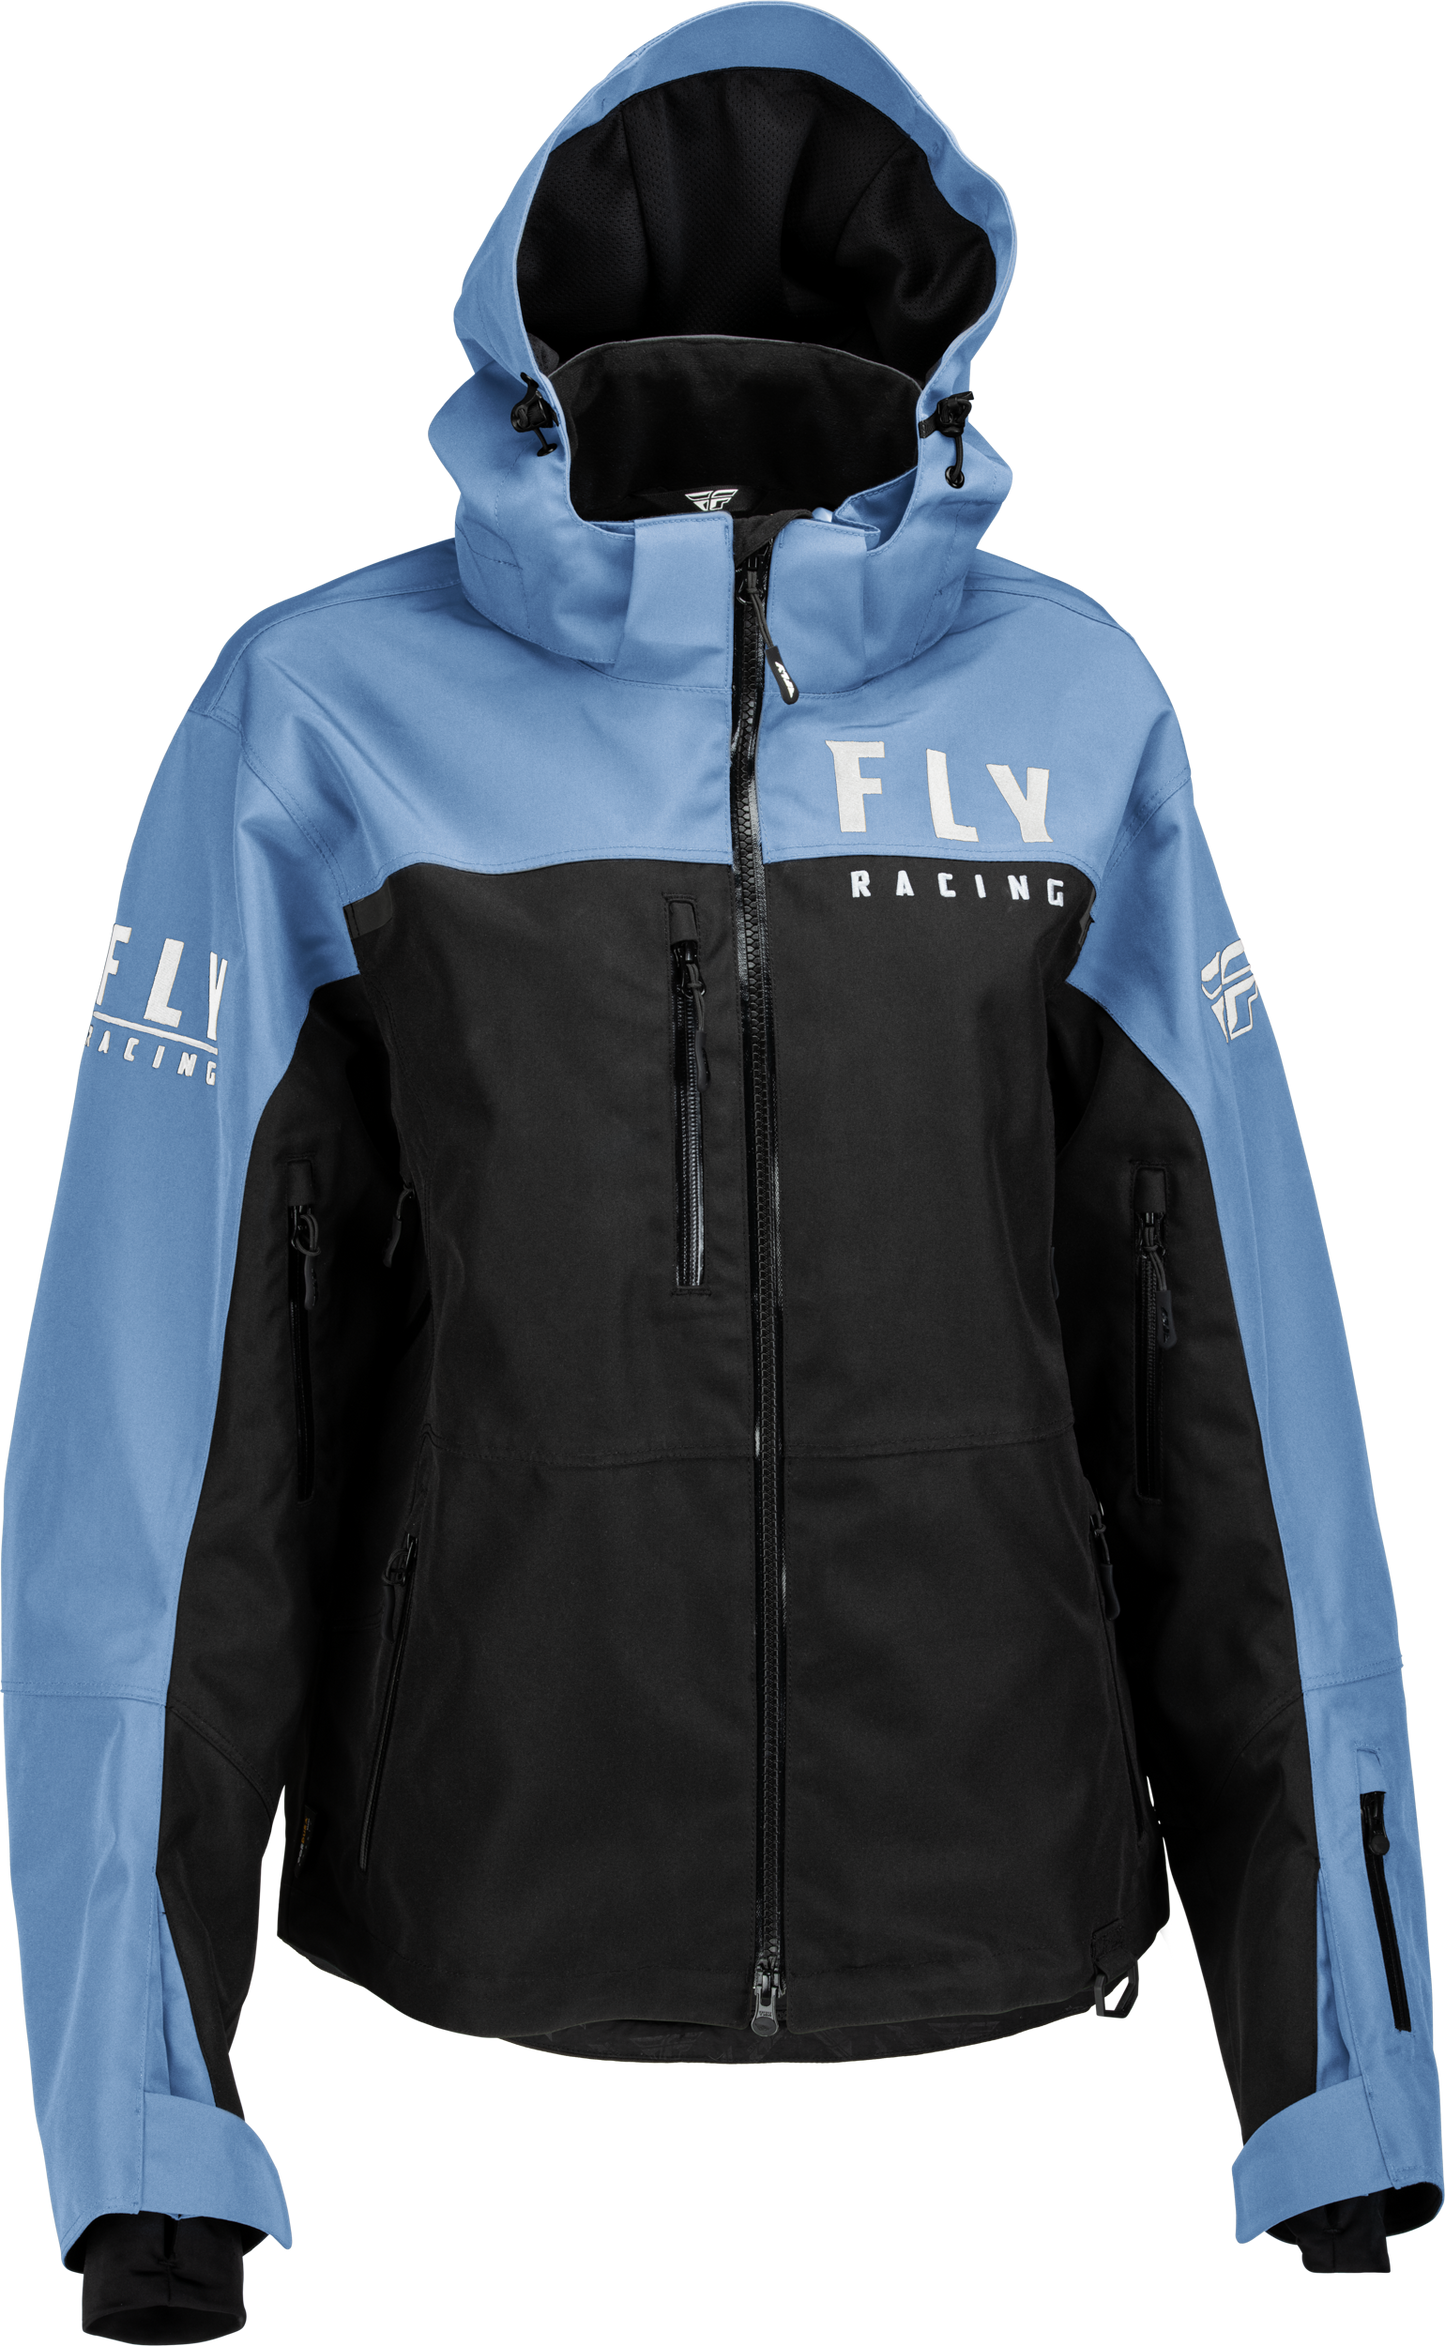 FLY RACING Women's Carbon Jacket Black/Blue Xl 470-4501X